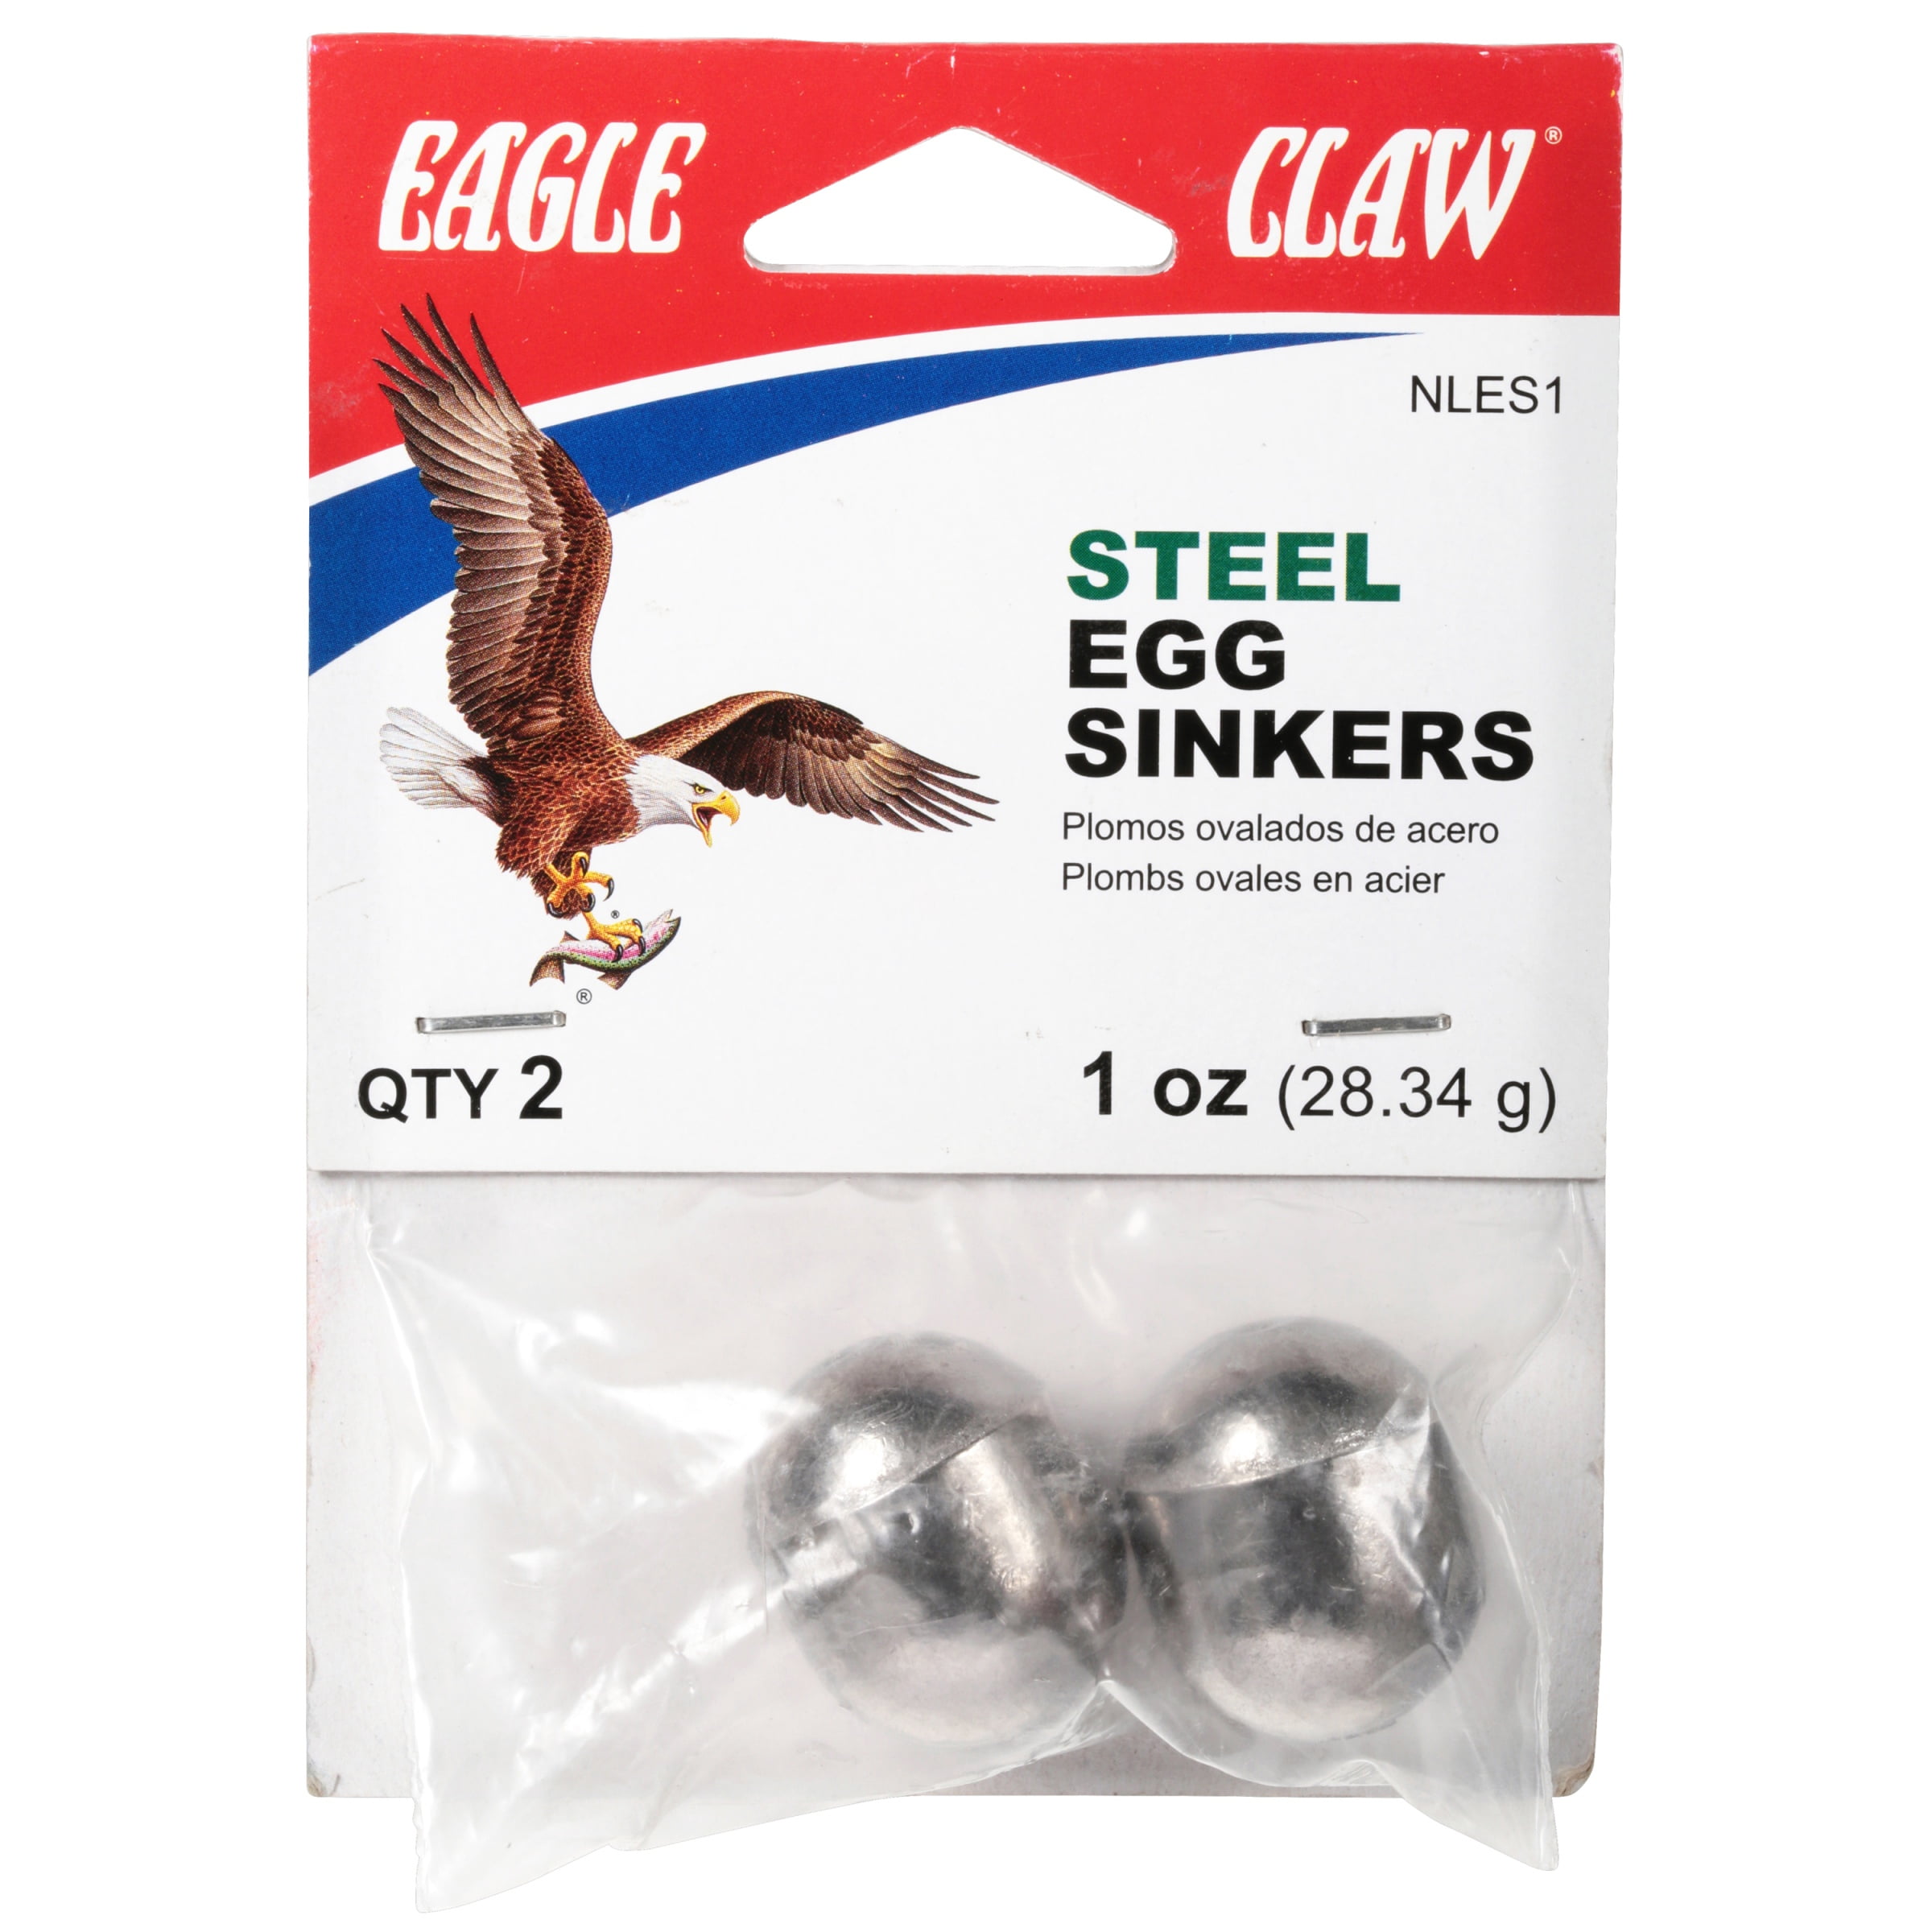 Eagle Claw Lazer Ready RIG-18 WITH1-1/2OZ Egg Sinker, Multi, One Size  (11010-001)